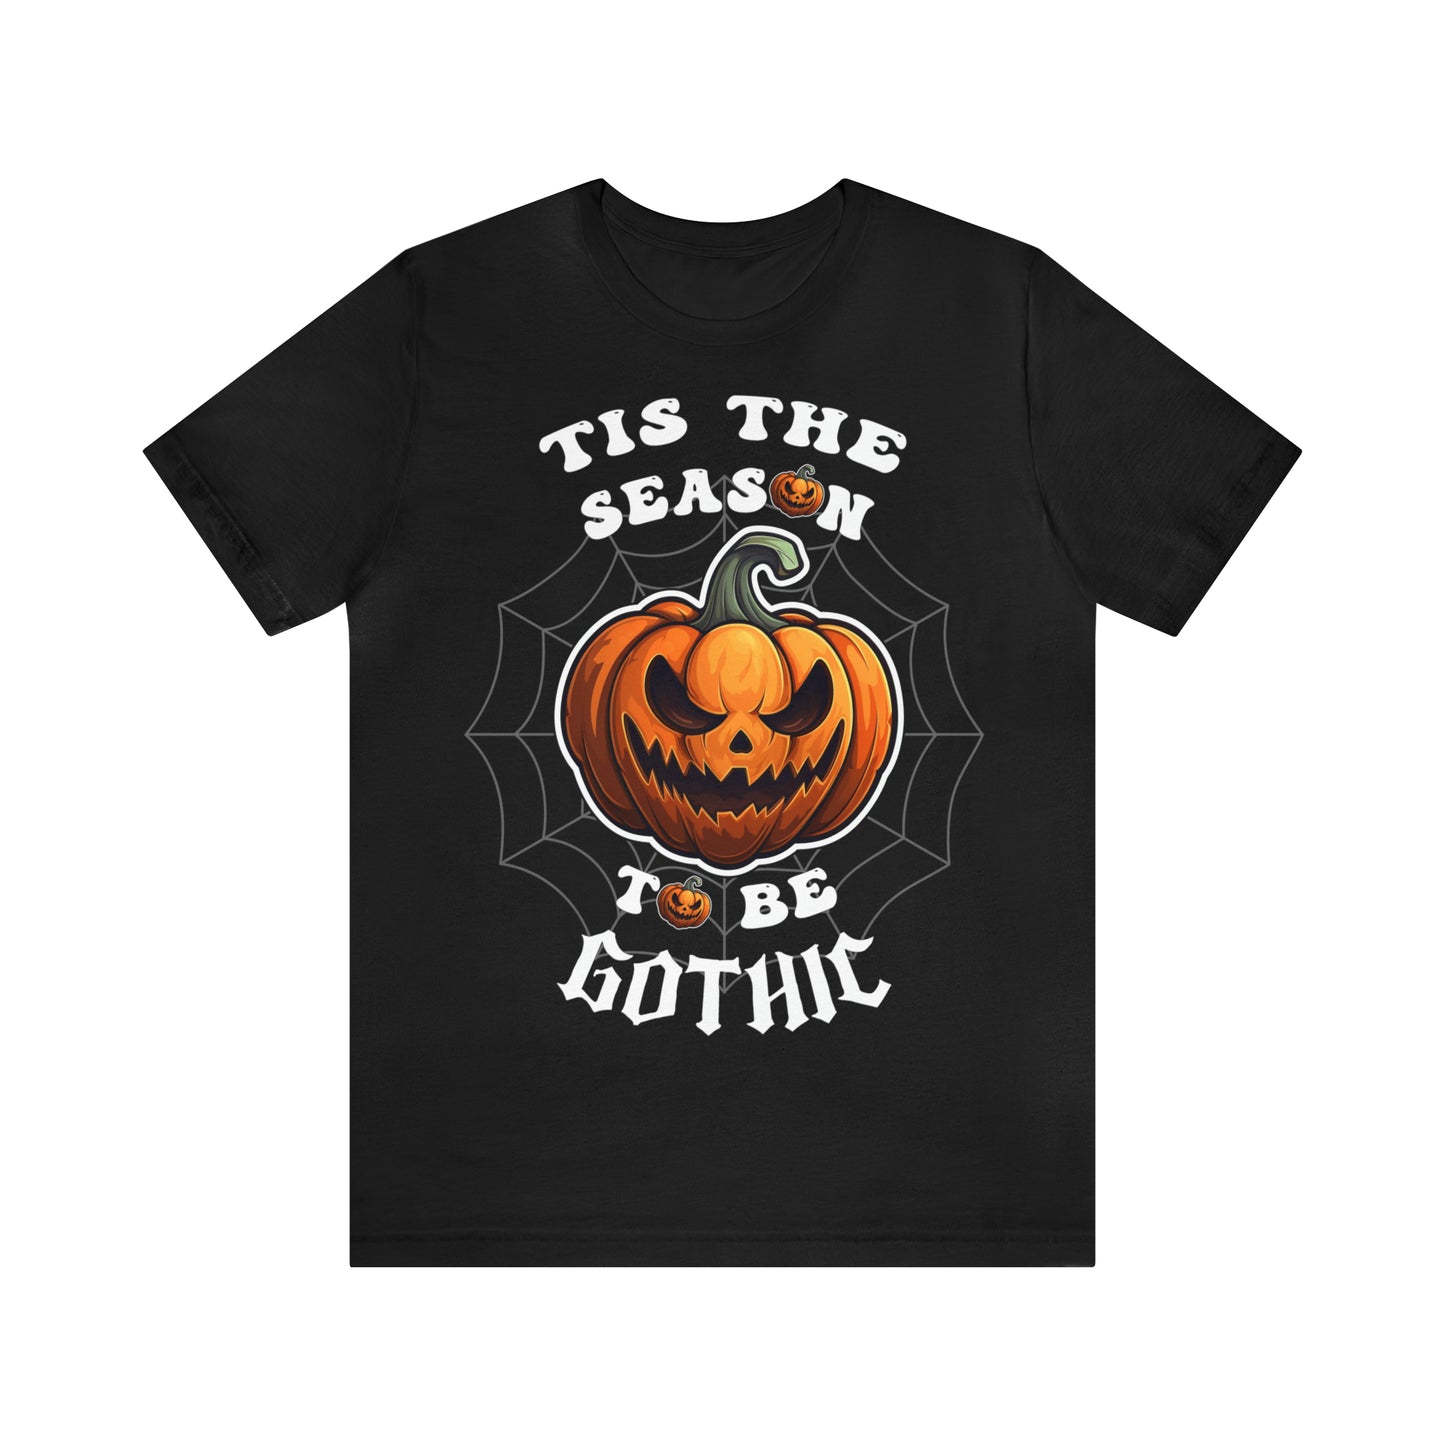 Pumpkin Halloween T-Shirt, Gothic Halloween T Shirt, Funny Gothic Tee, Halloween Graphic Tee, Gothic Aesthetic Tshirt